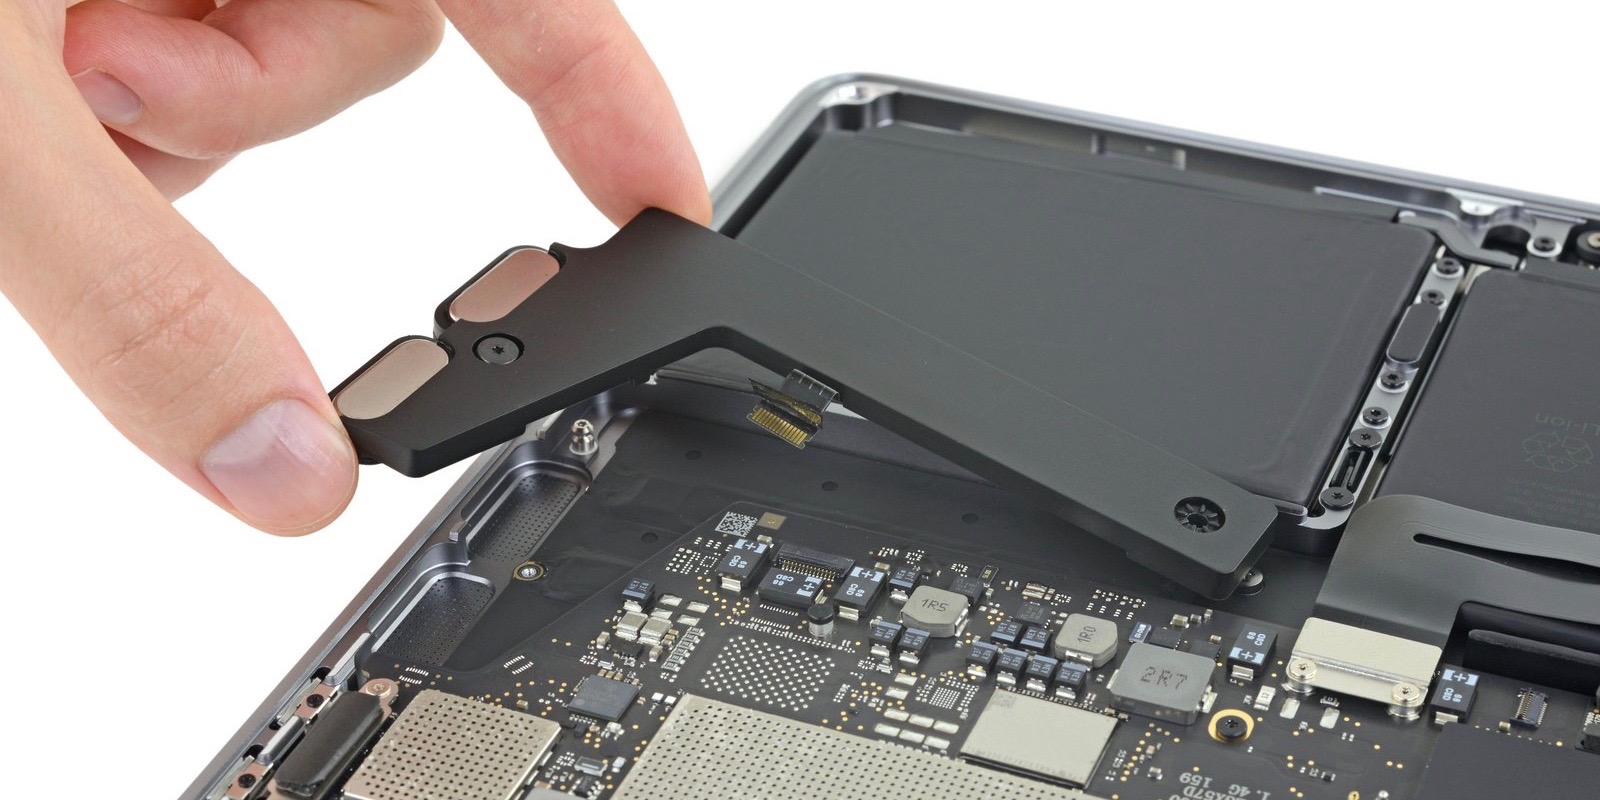 teori fraktion type 2019 13-inch MacBook Pro teardown reveals soldered-down SSD, slightly  larger battery, modular ports - 9to5Mac